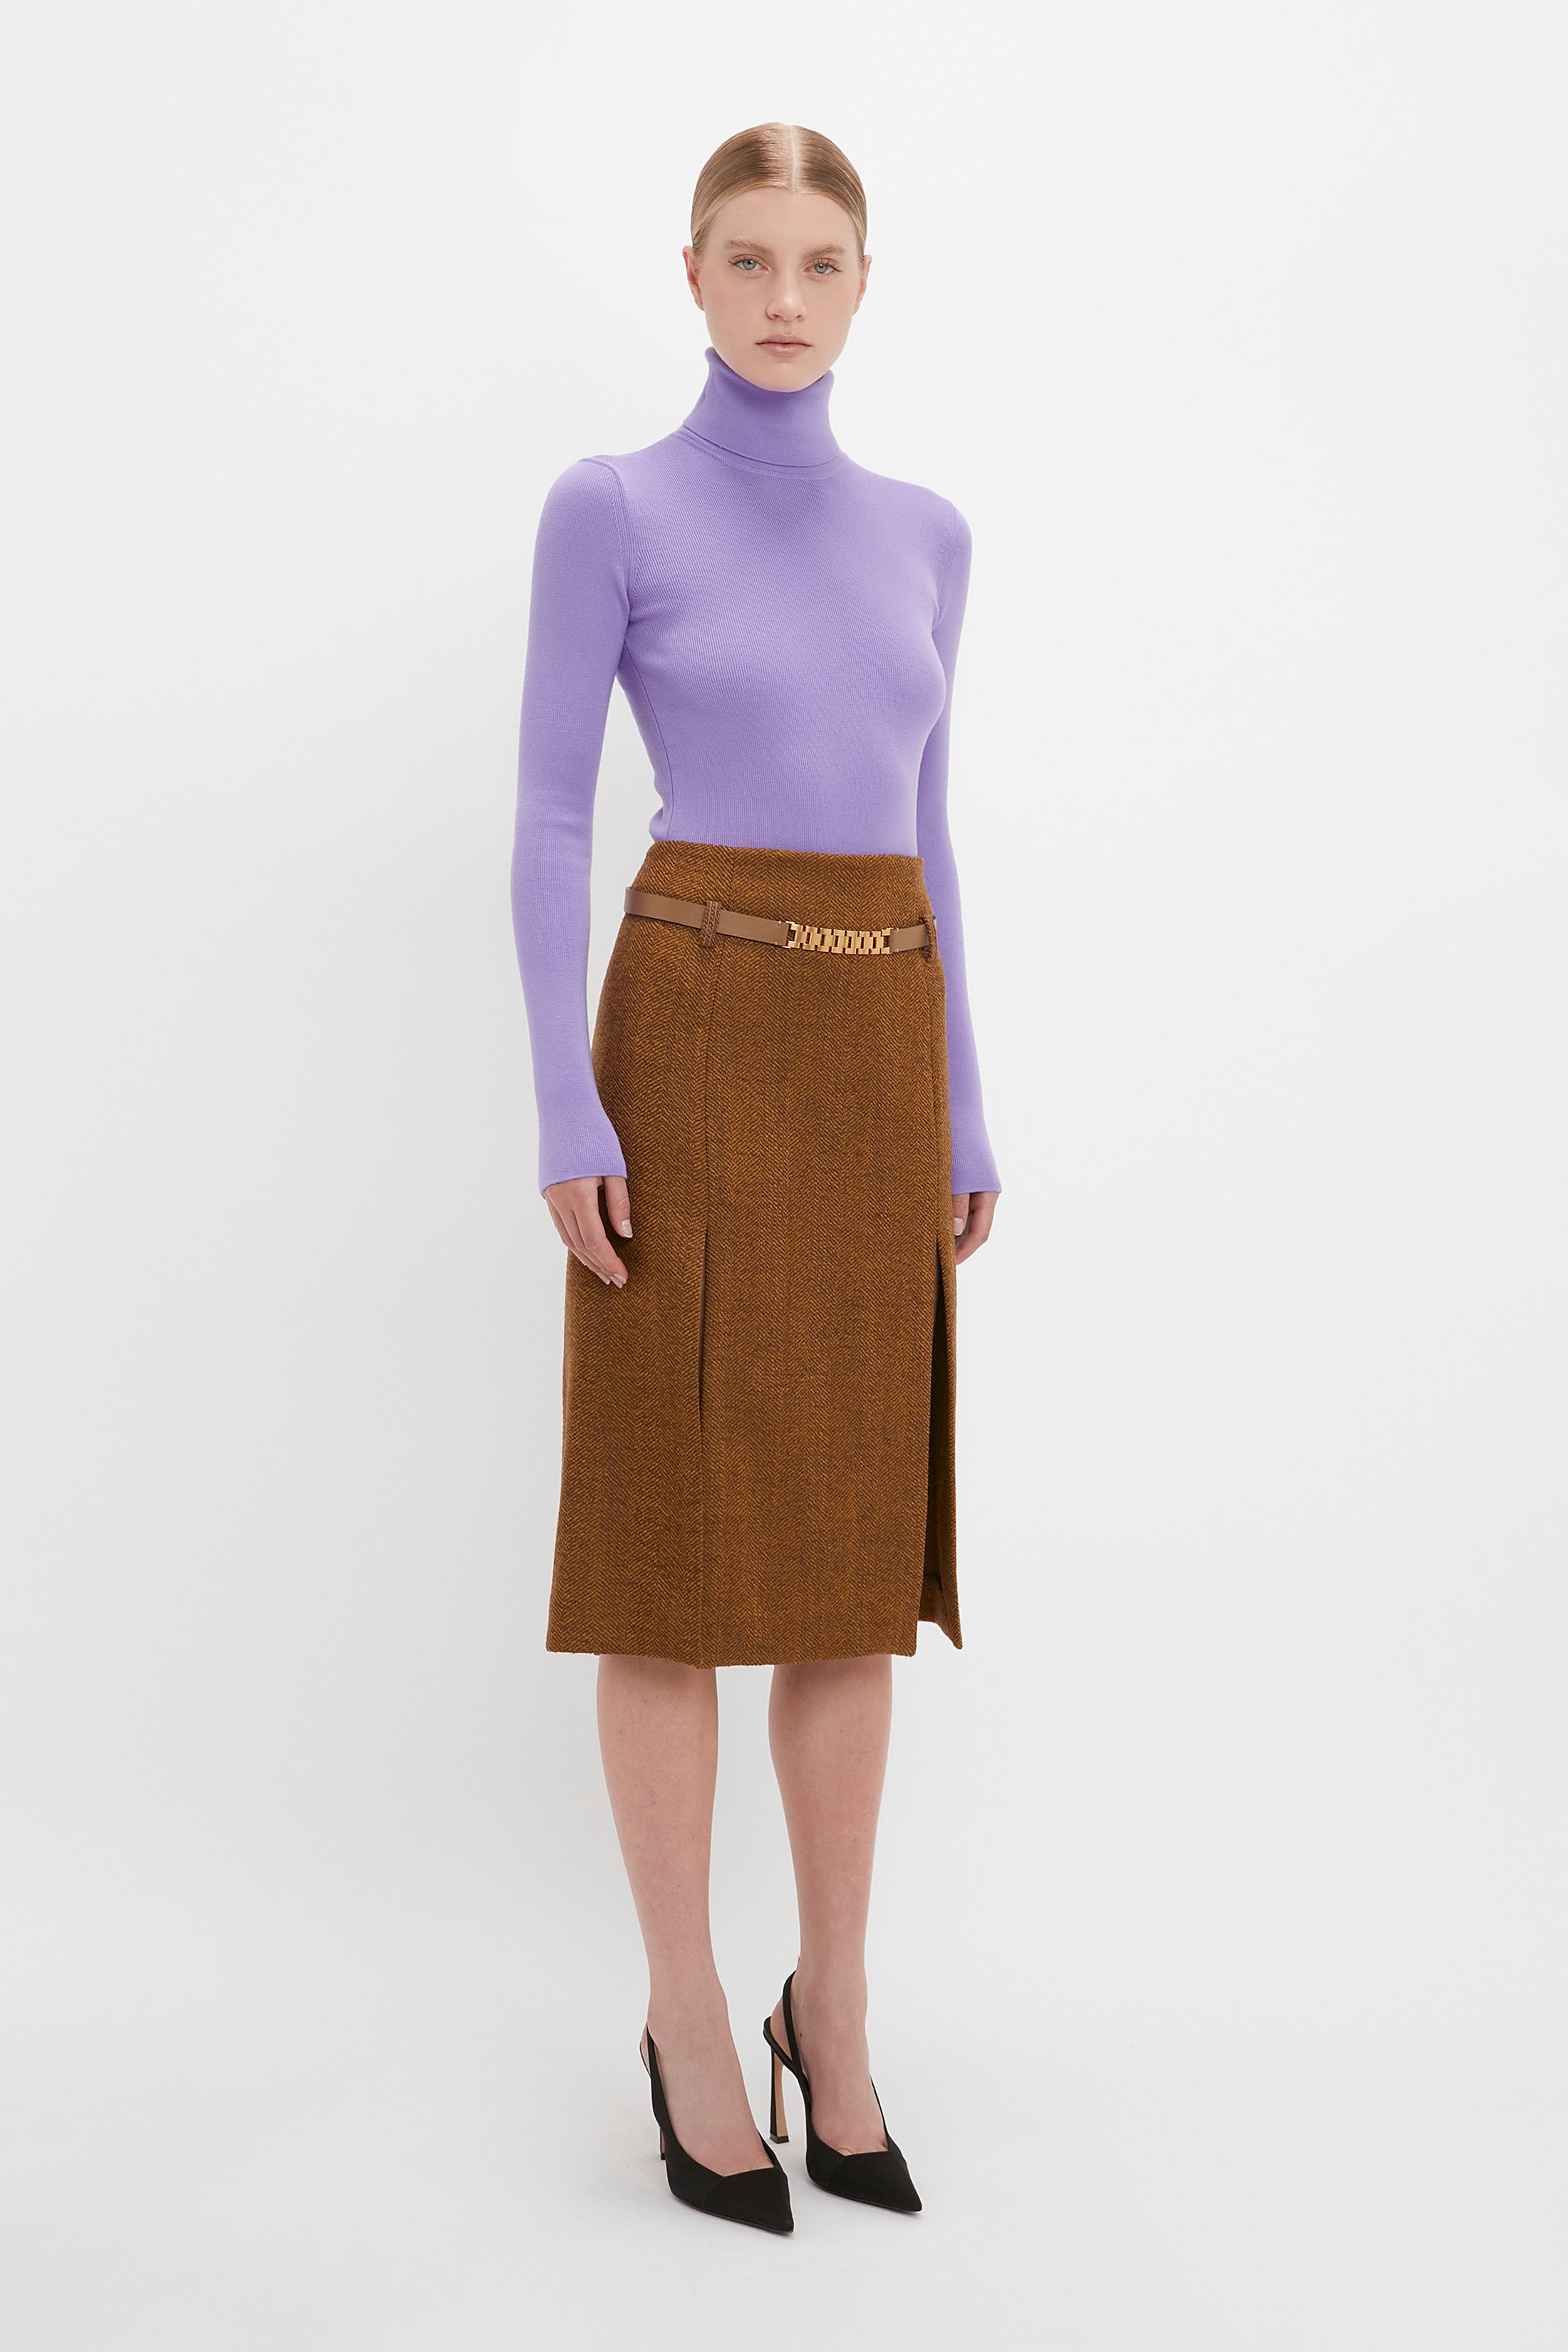 Double Layer Split Skirt In Caramel - 3